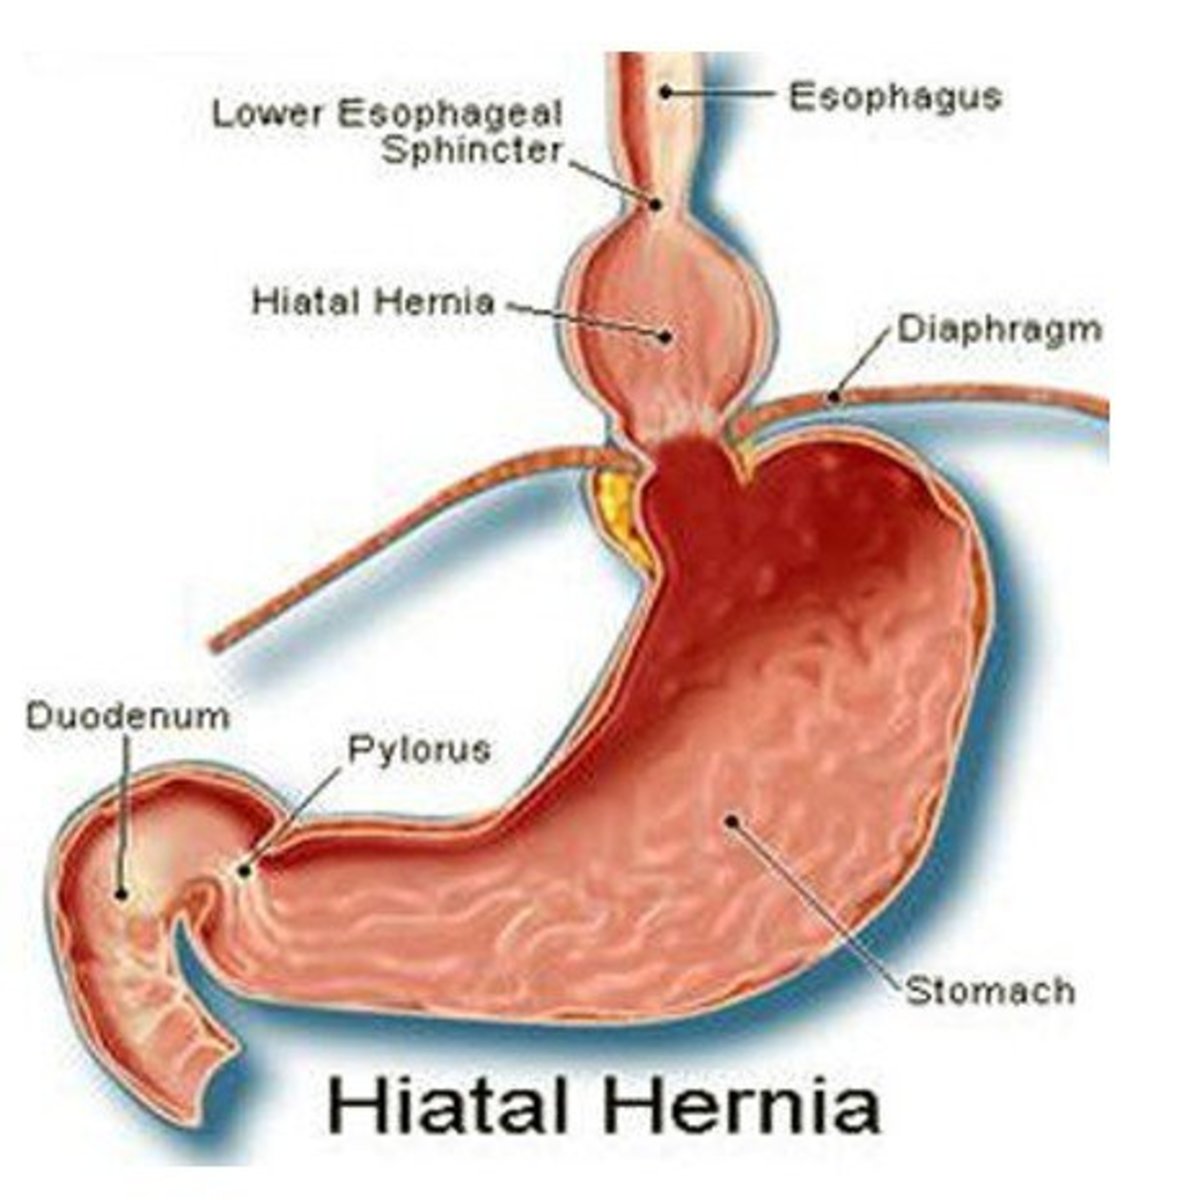 what is a hiatal hernia